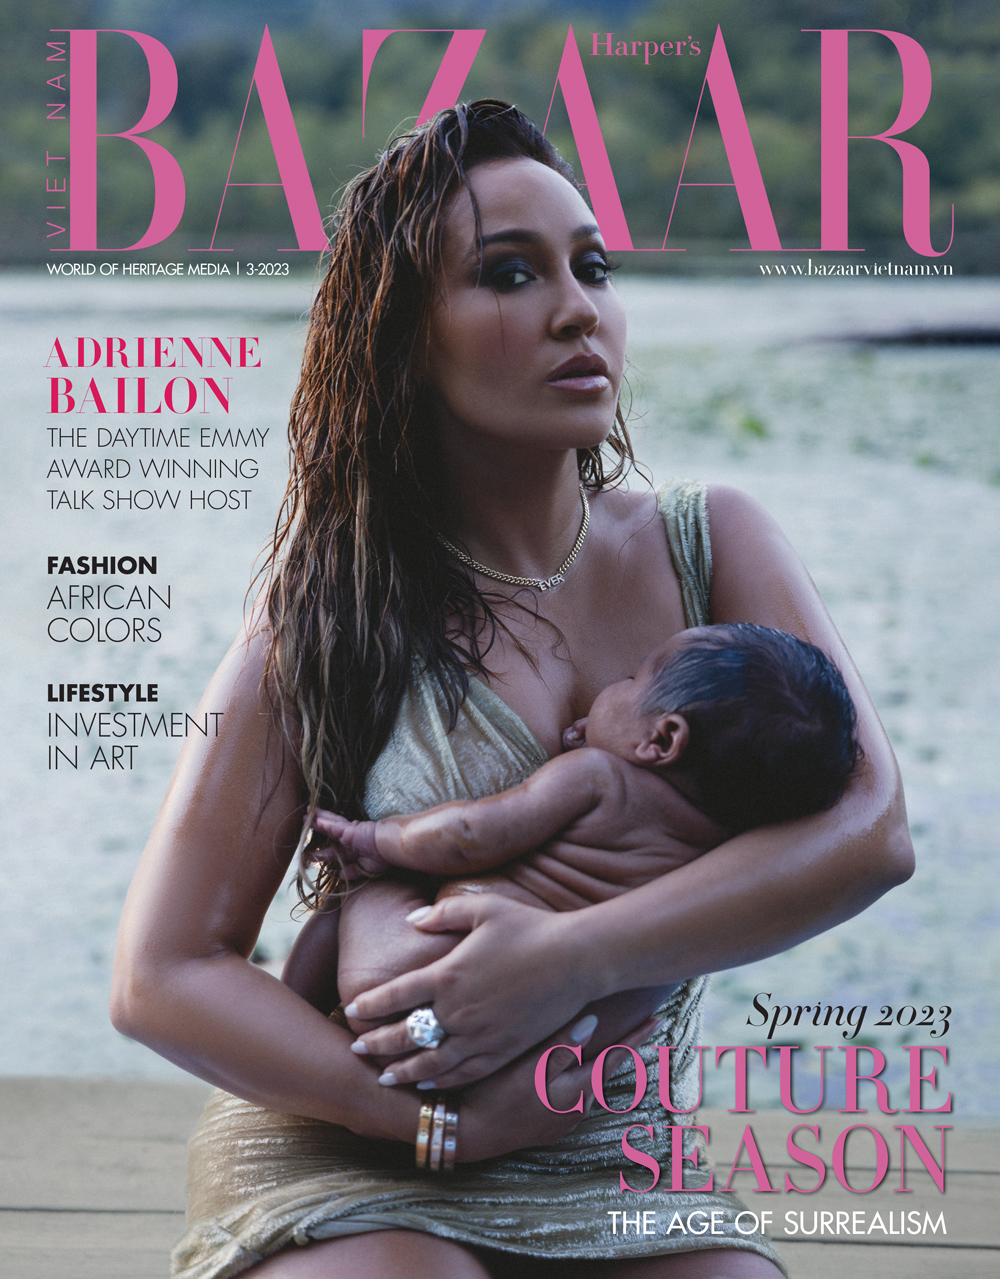 Adrienne Bailon trên trang bìa Harper’s Bazaar Việt Nam 3/23.